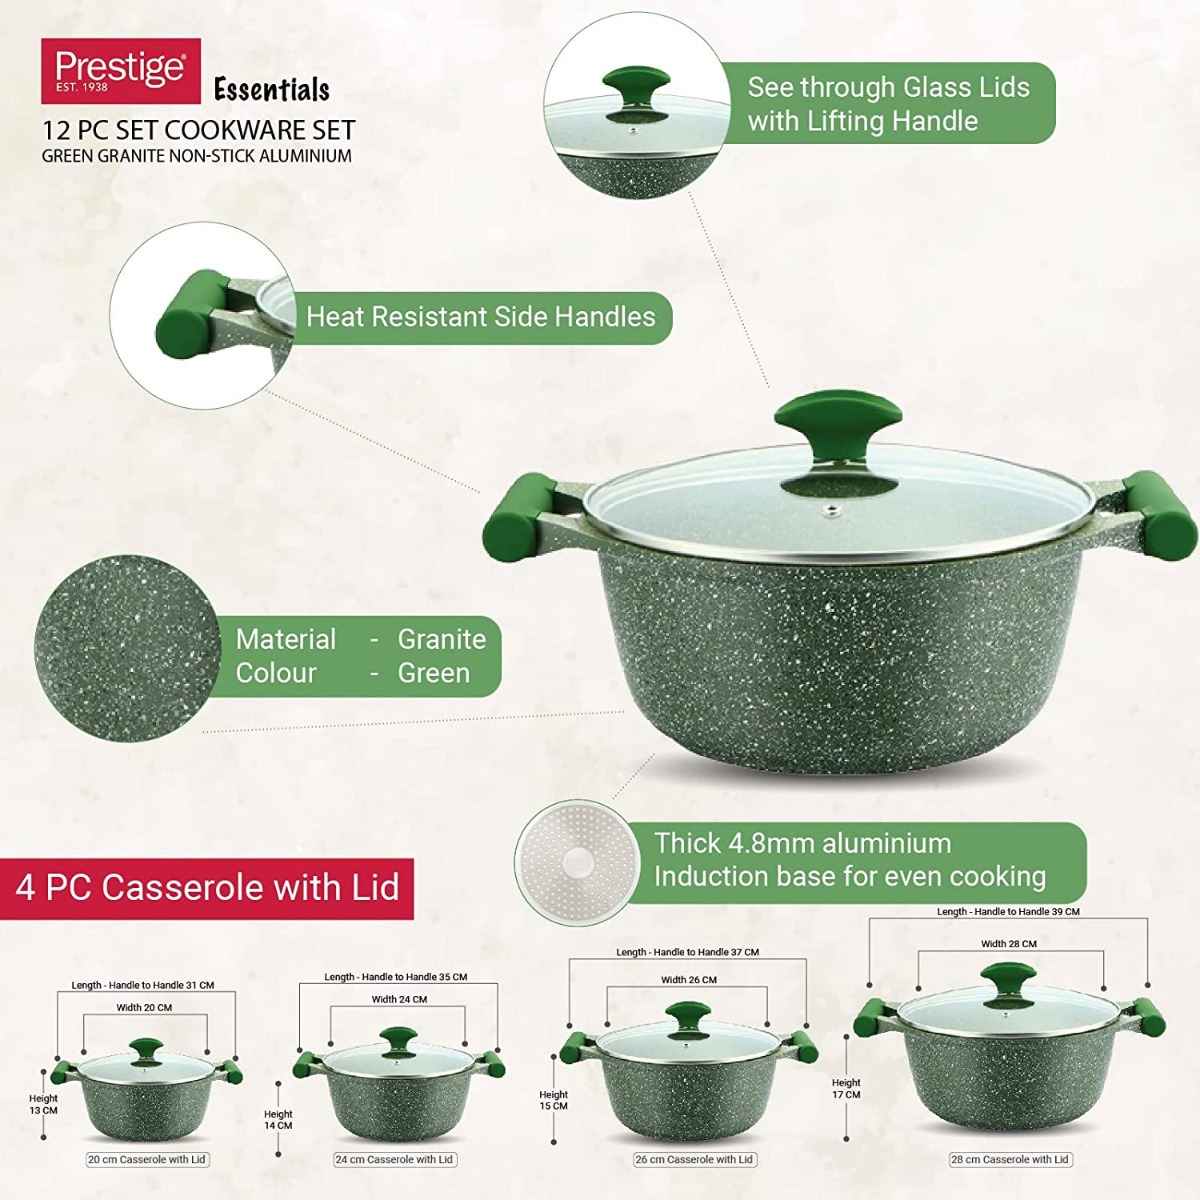 Prestige Essentials 12 pc Cookware set Green Granite Non-Stick Aluminium



